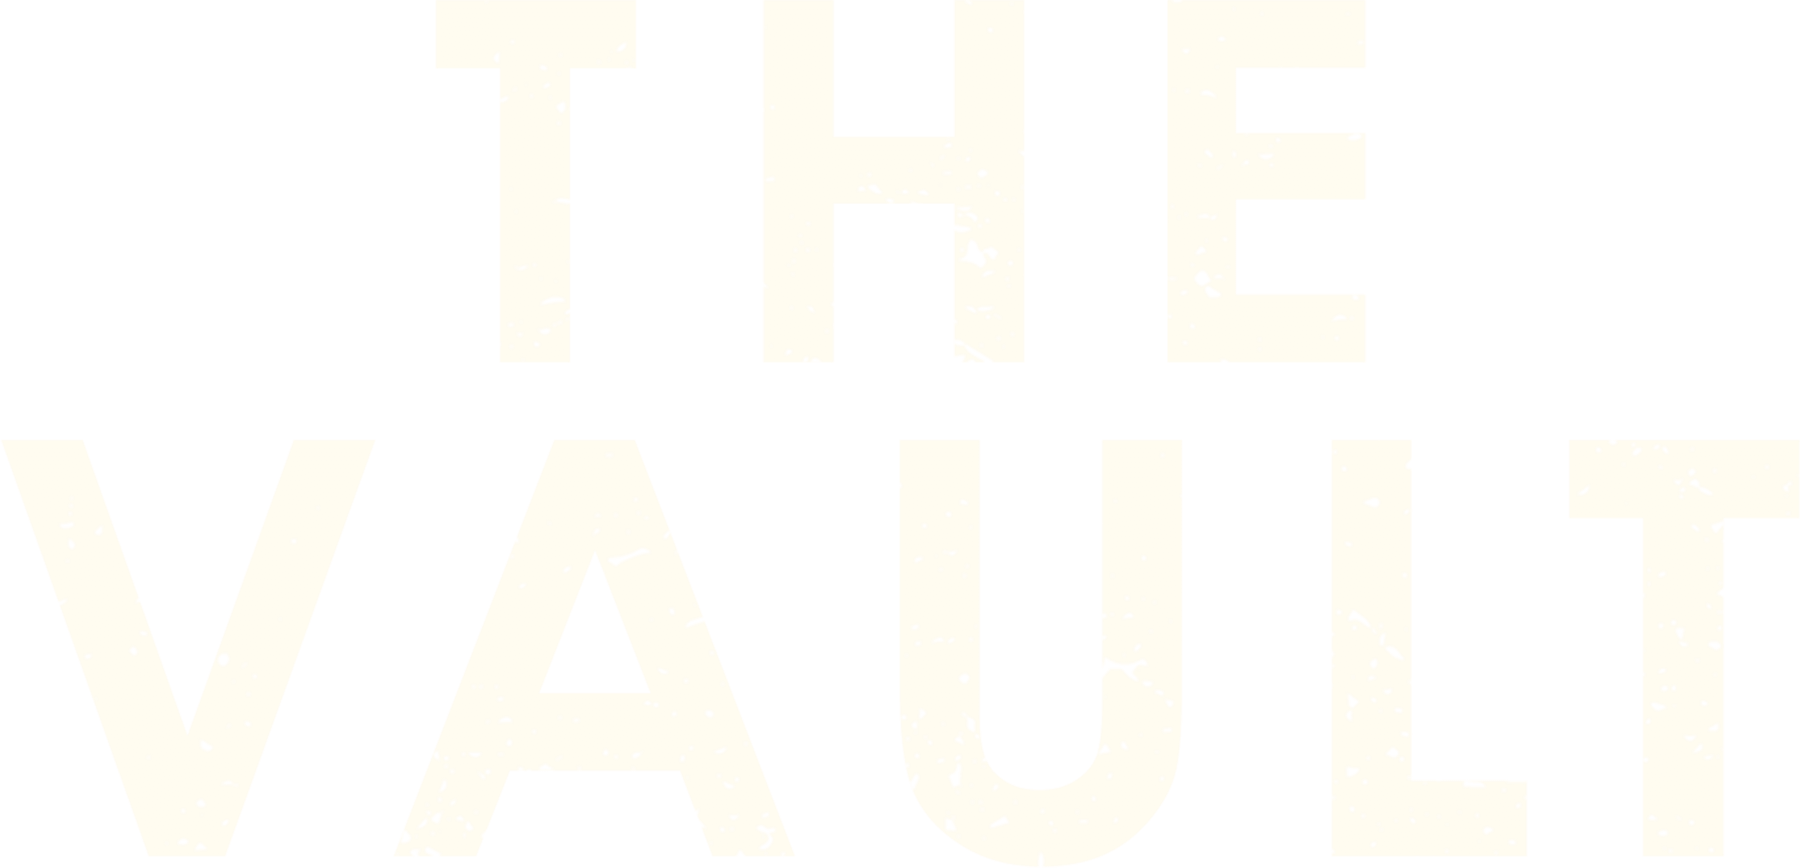 The Vault logo